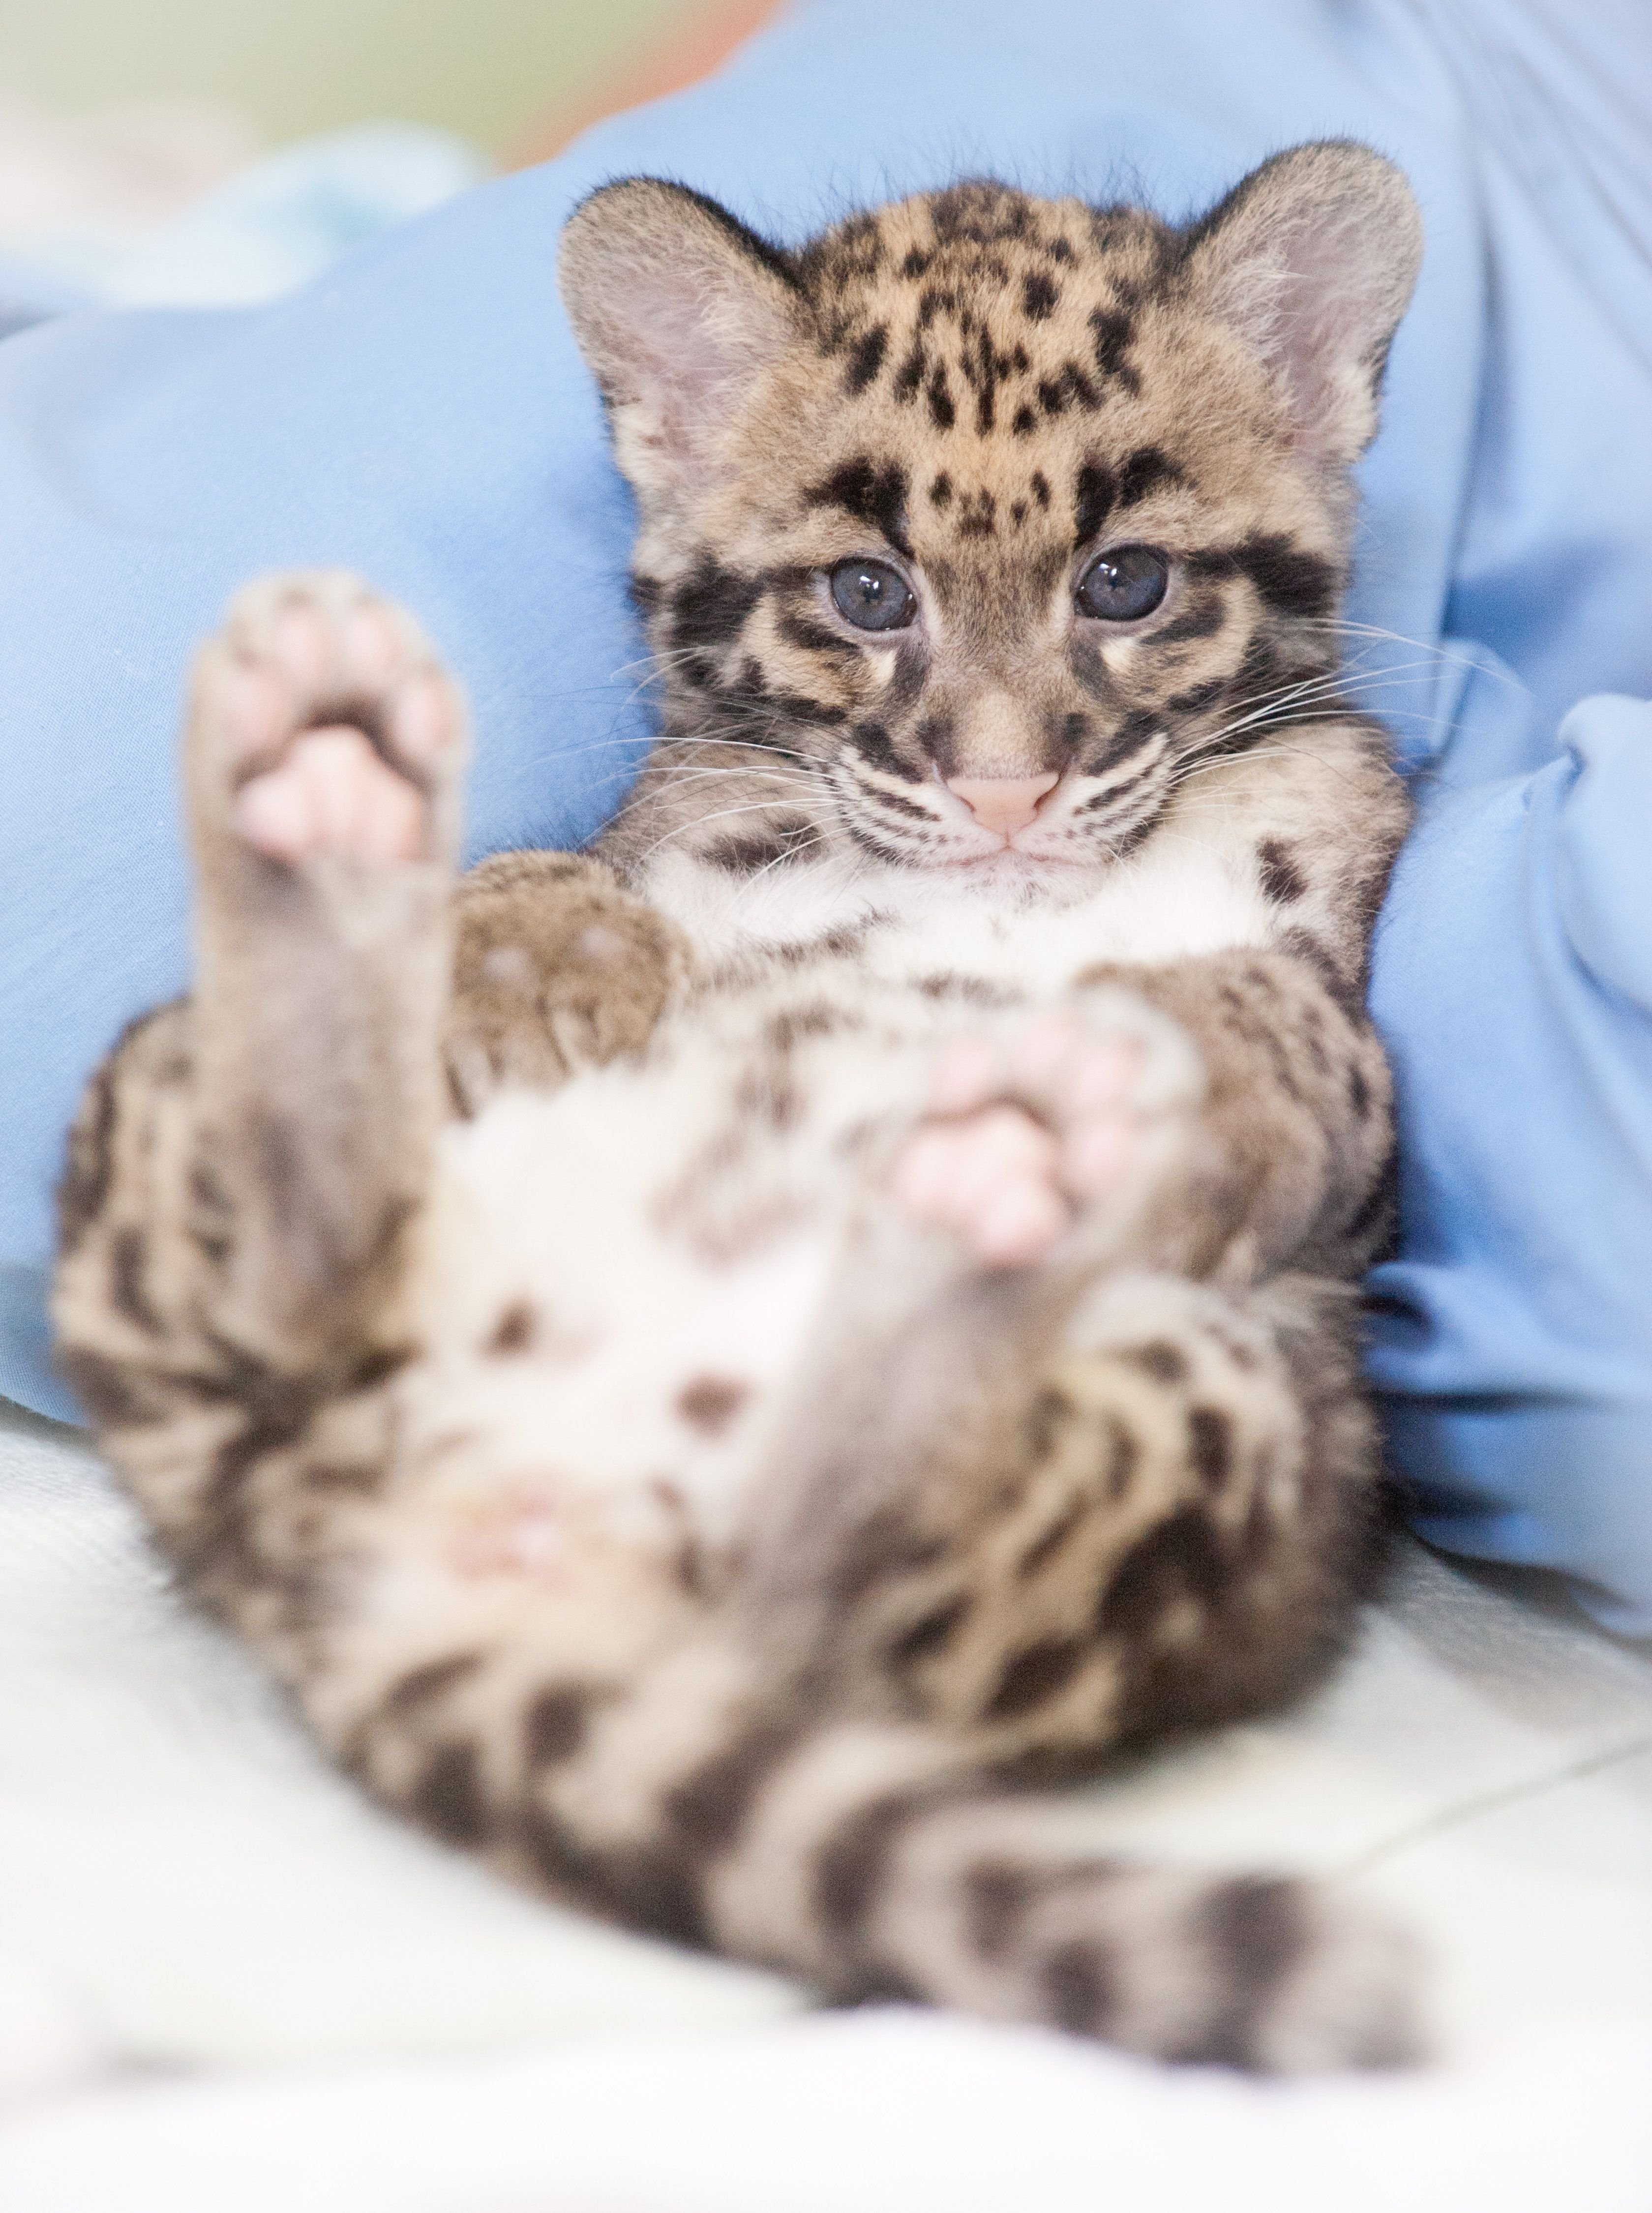 Котята похожи на кошку. Дымчатый леопард детеныш. Дымчатый леопард малыш. Дымчатый леопард котенок. Детеныш леопарда.